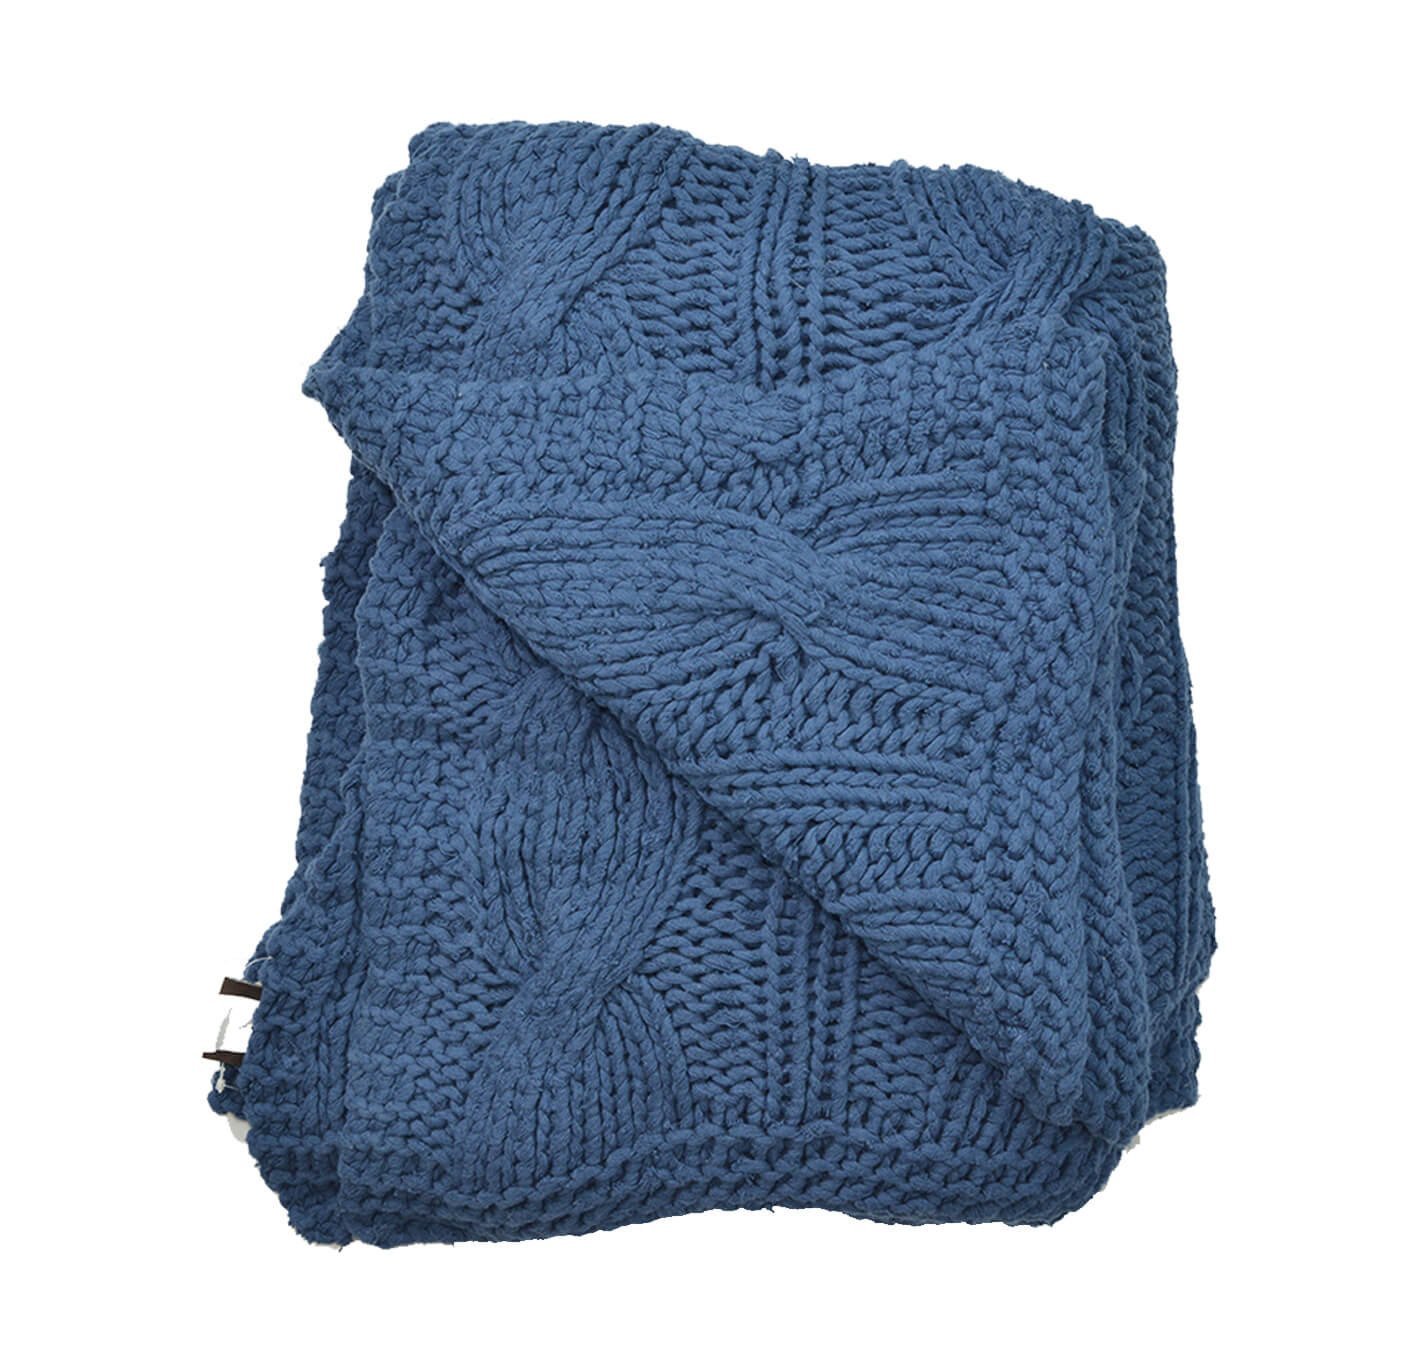 Denim Organic Cotton Cable Knit Blanket By Aviva Stanoff Leibona